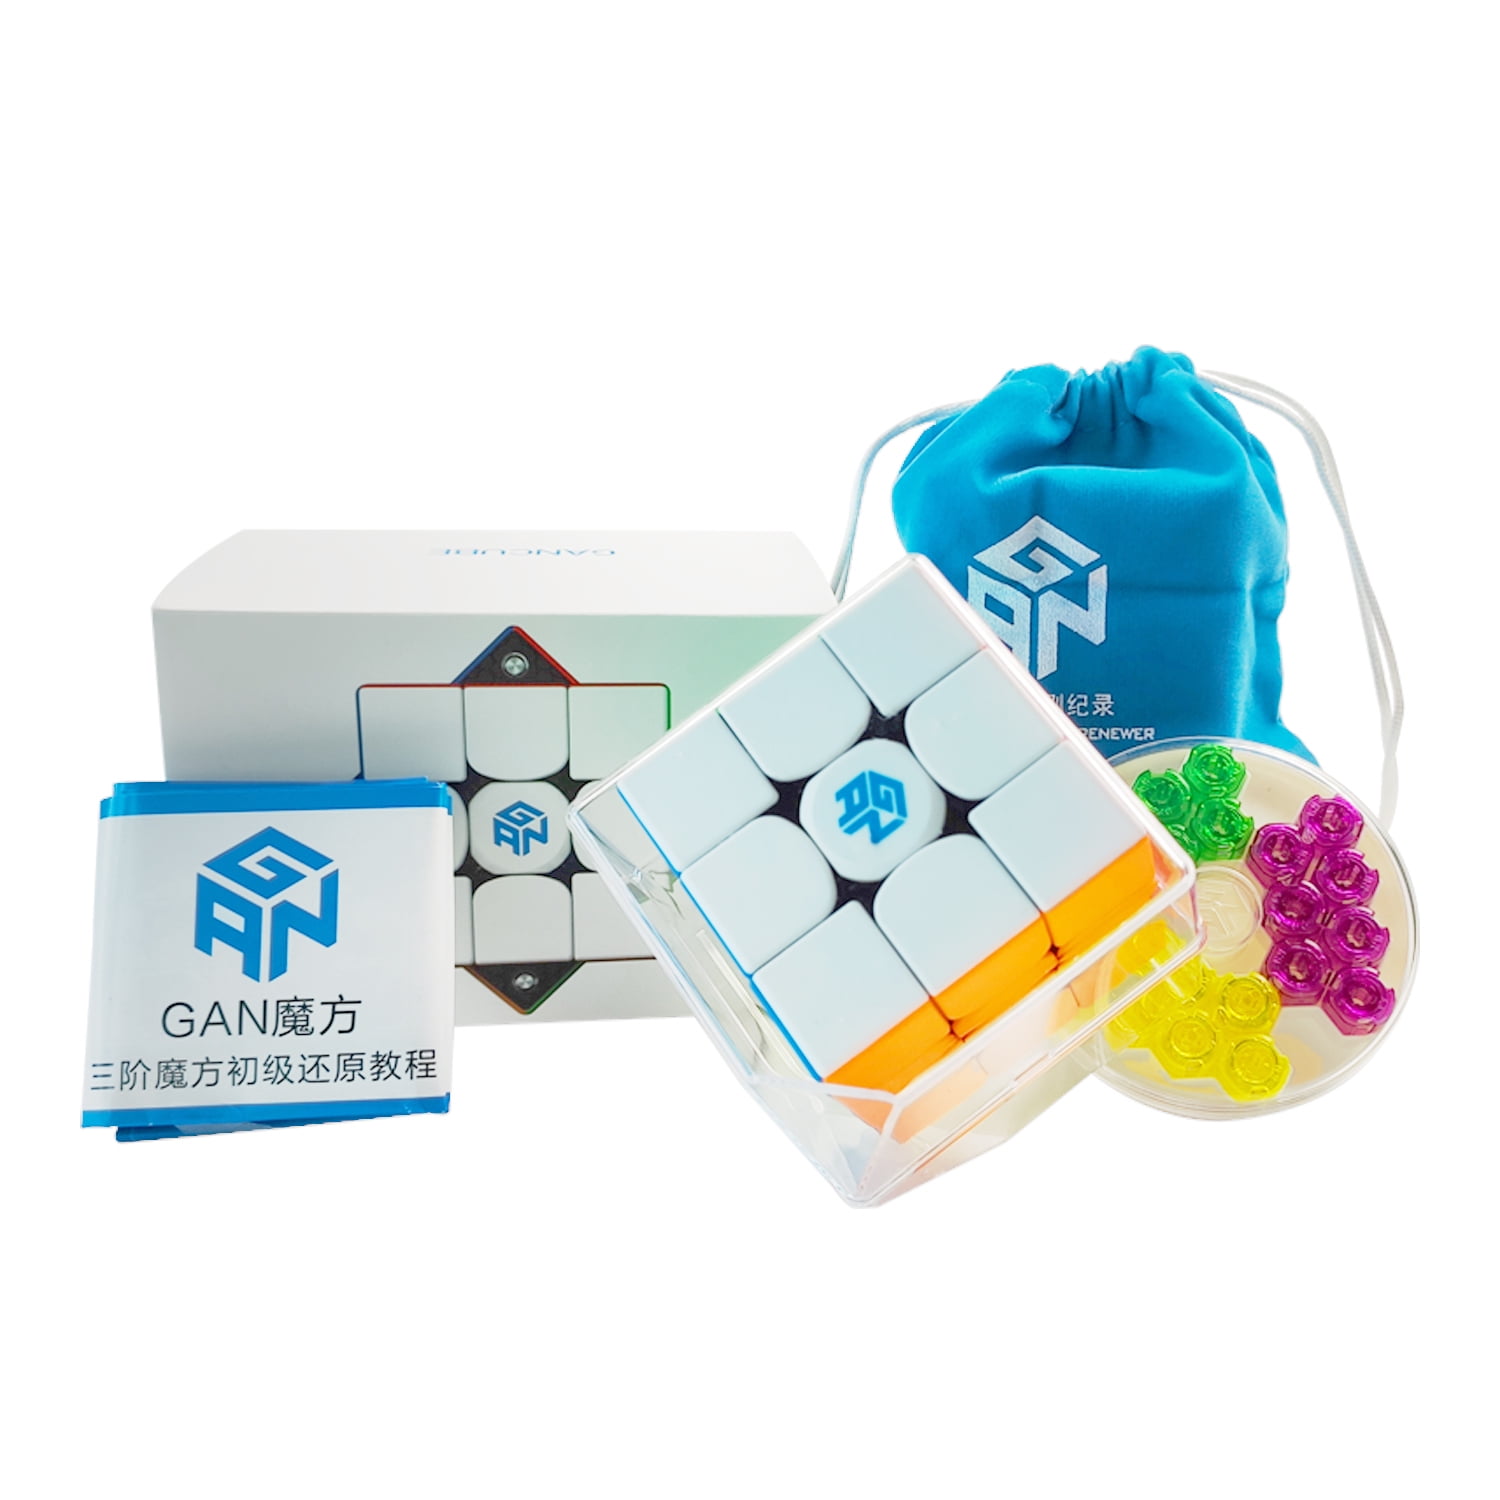 Instruere pensum Tal højt GAN 356 M, 3x3 Magnetic Speed Cube Magic Cube with Extra GES, Stickerless,  Ver. 2020 - Walmart.com